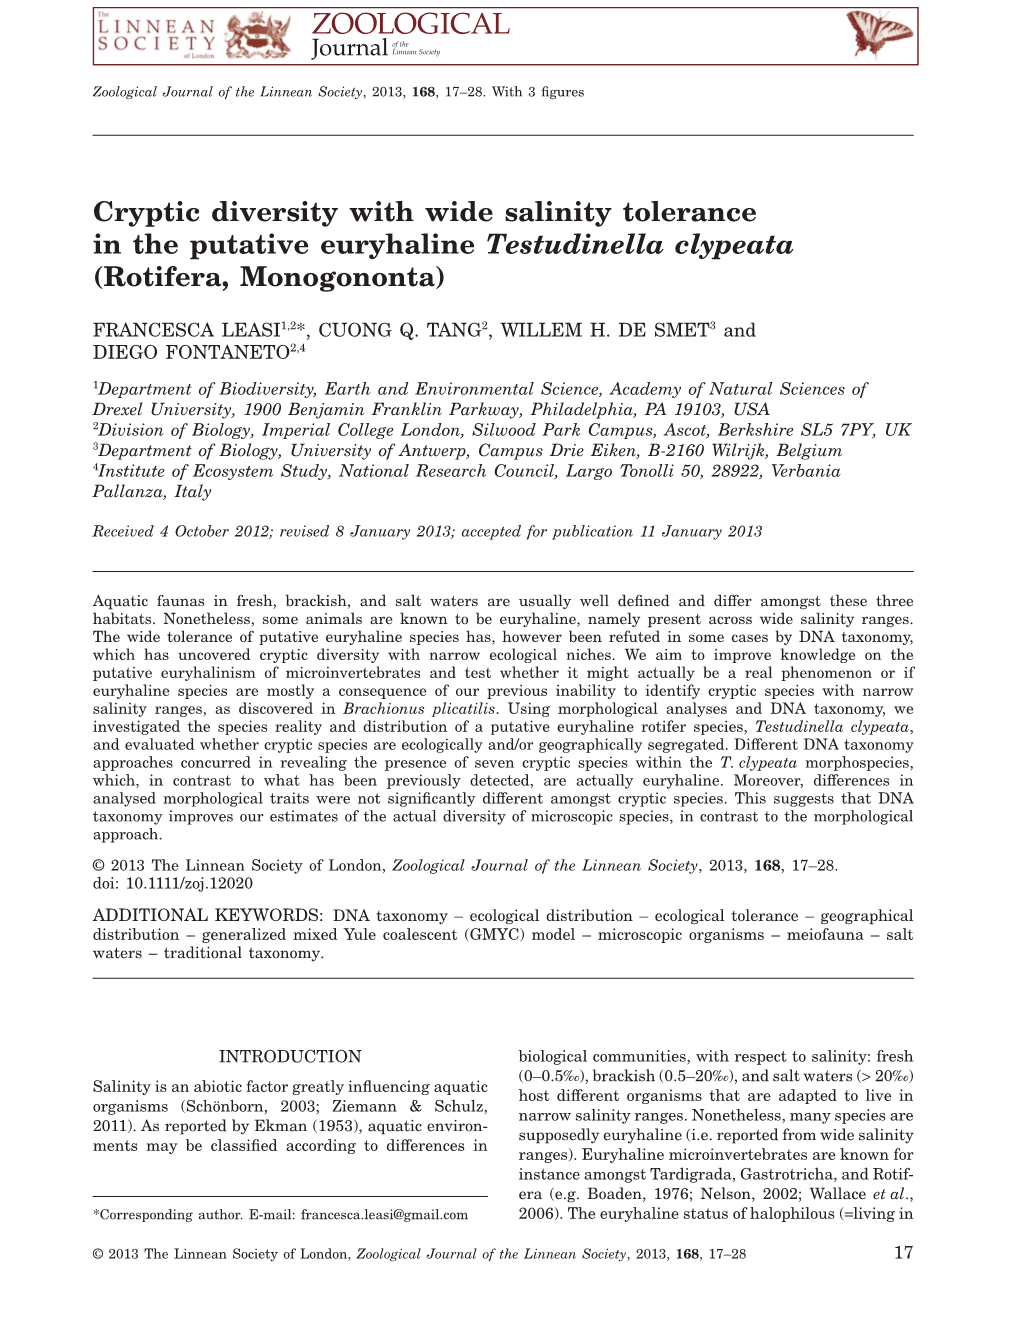 Cryptic Diversity with Wide Salinity Tolerance in the Putative Euryhaline Testudinella Clypeata (Rotifera, Monogononta)